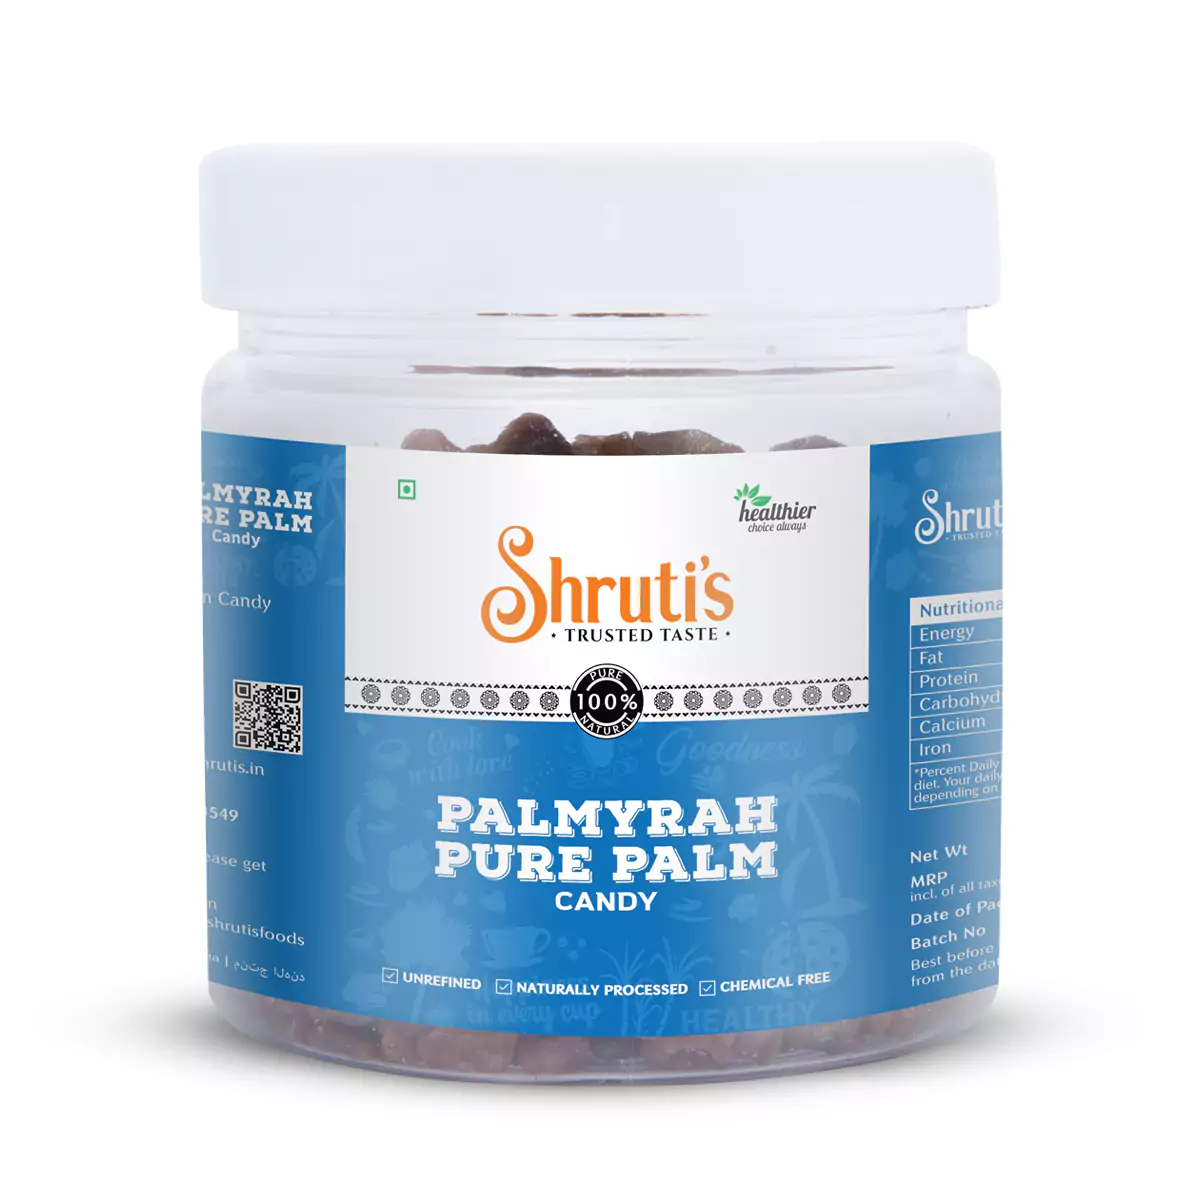 Shrutis Palmyra Pure Palm Candy 250 gm